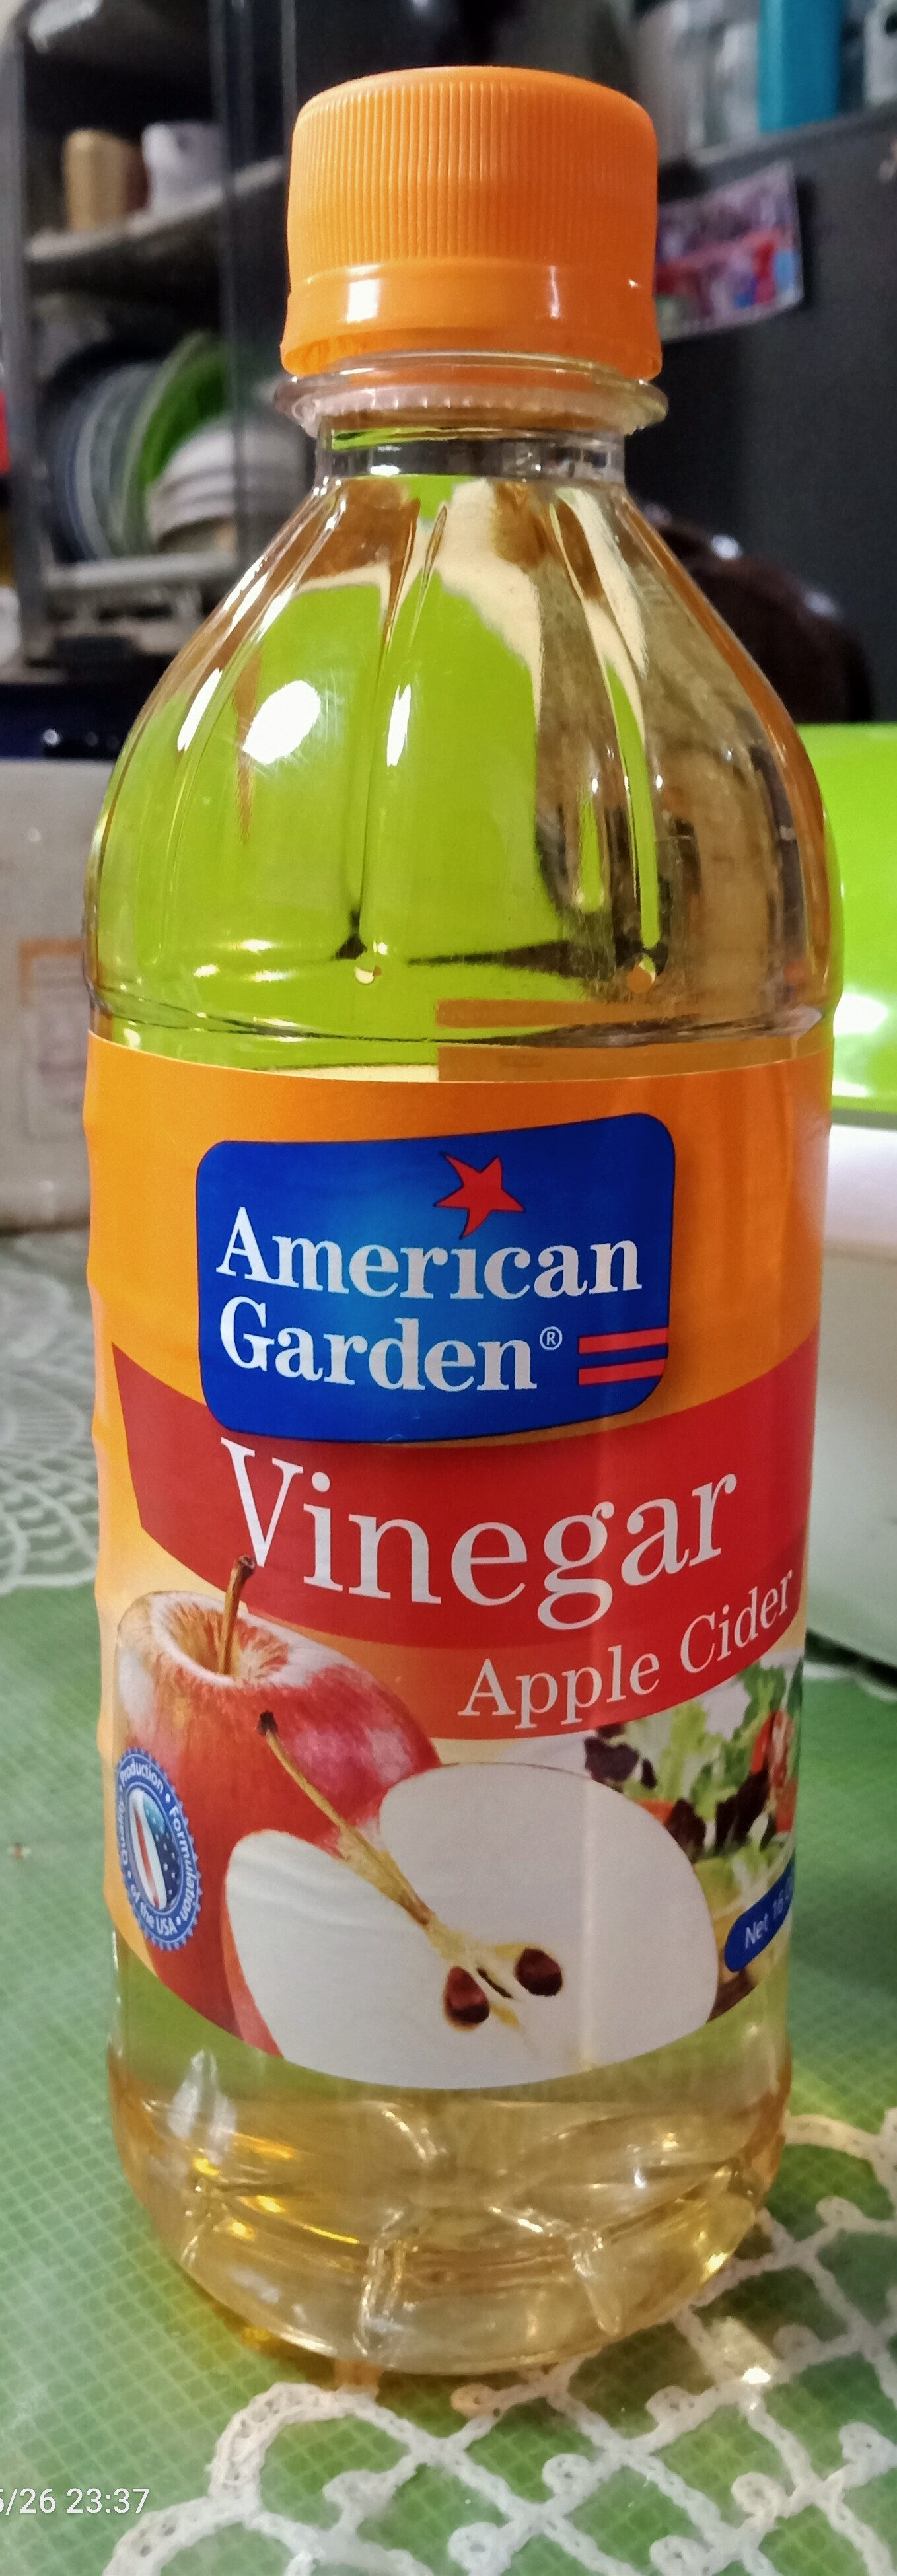 Apple cider vinegar - Product